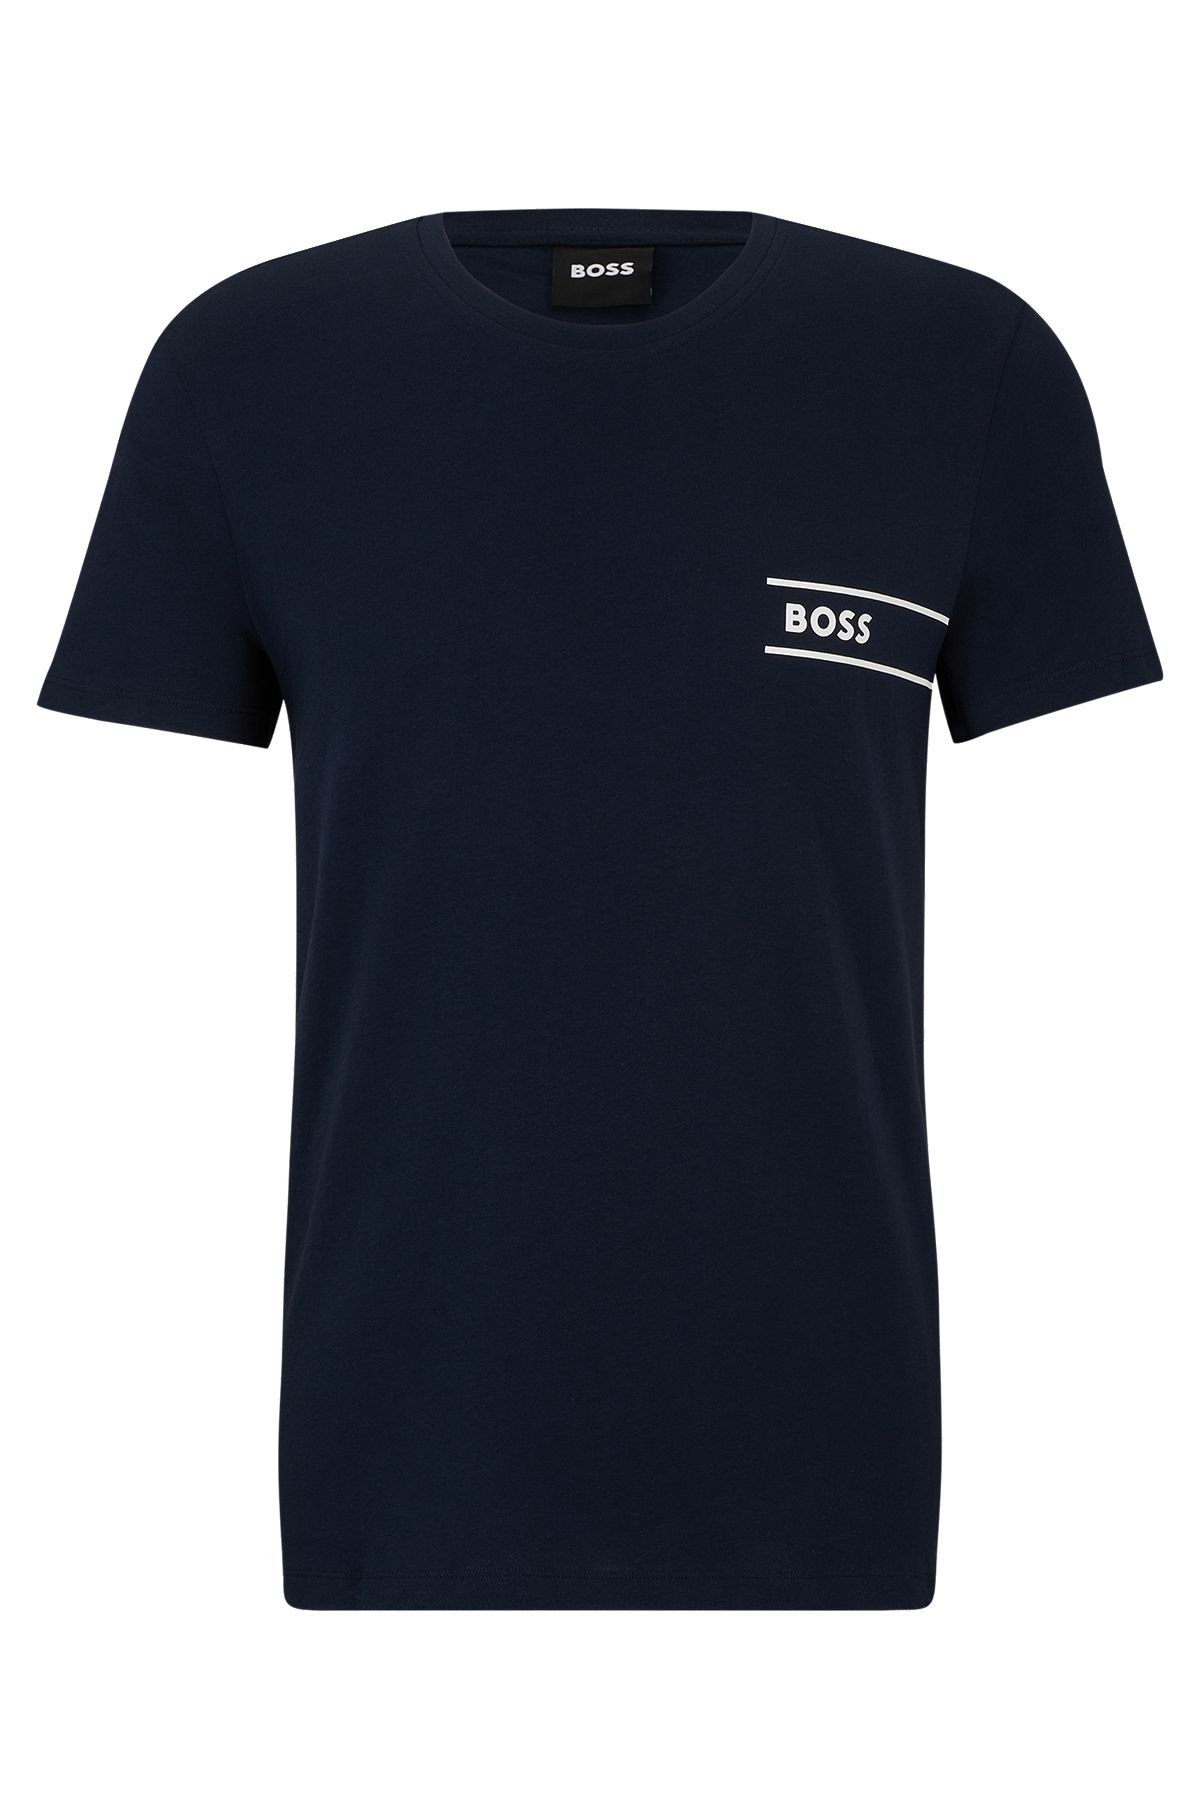 Camiseta interior de punto de algodón con rayas y logo, Azul oscuro